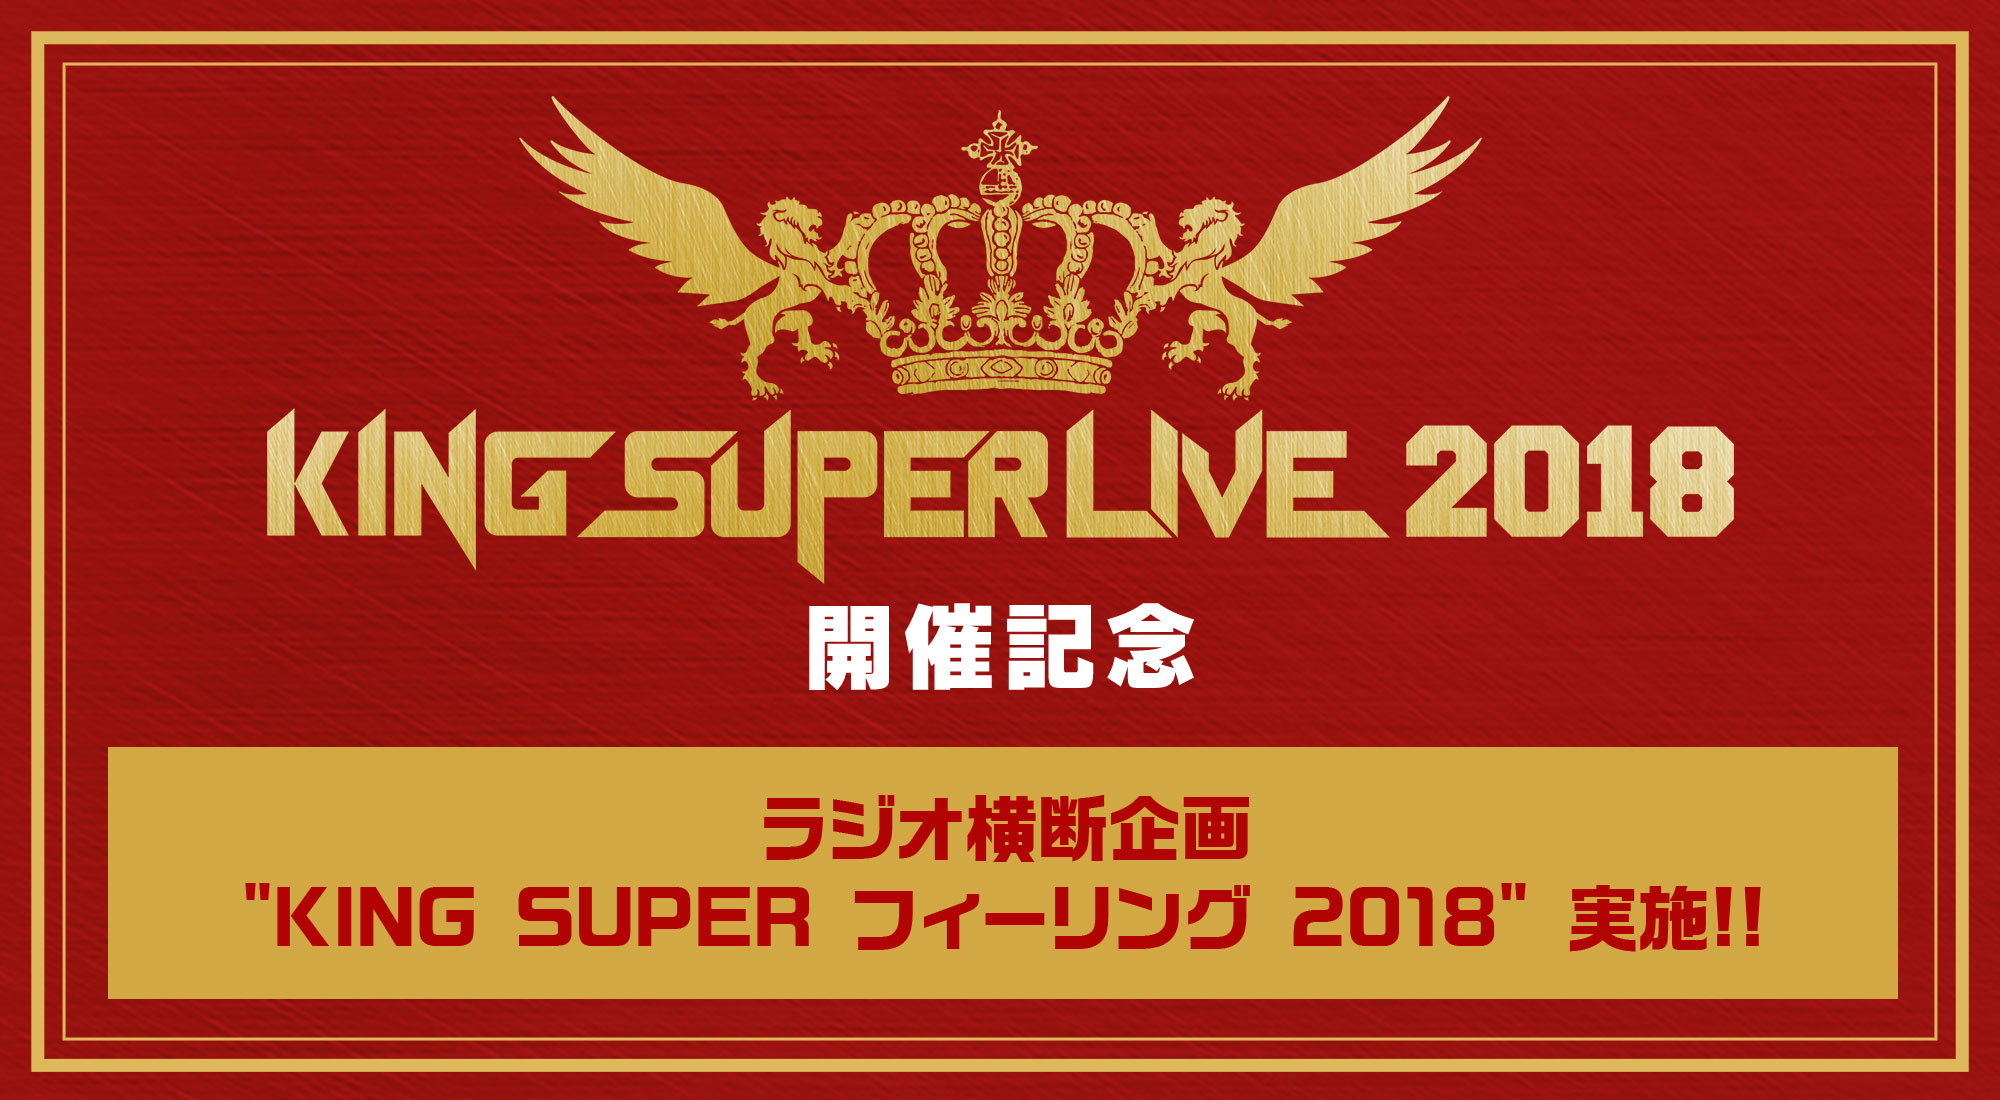 「KING SUPER LIVE 2018」開催記念 ラジオ横断企画“KING SUPER フィーリング 2018”実施！！